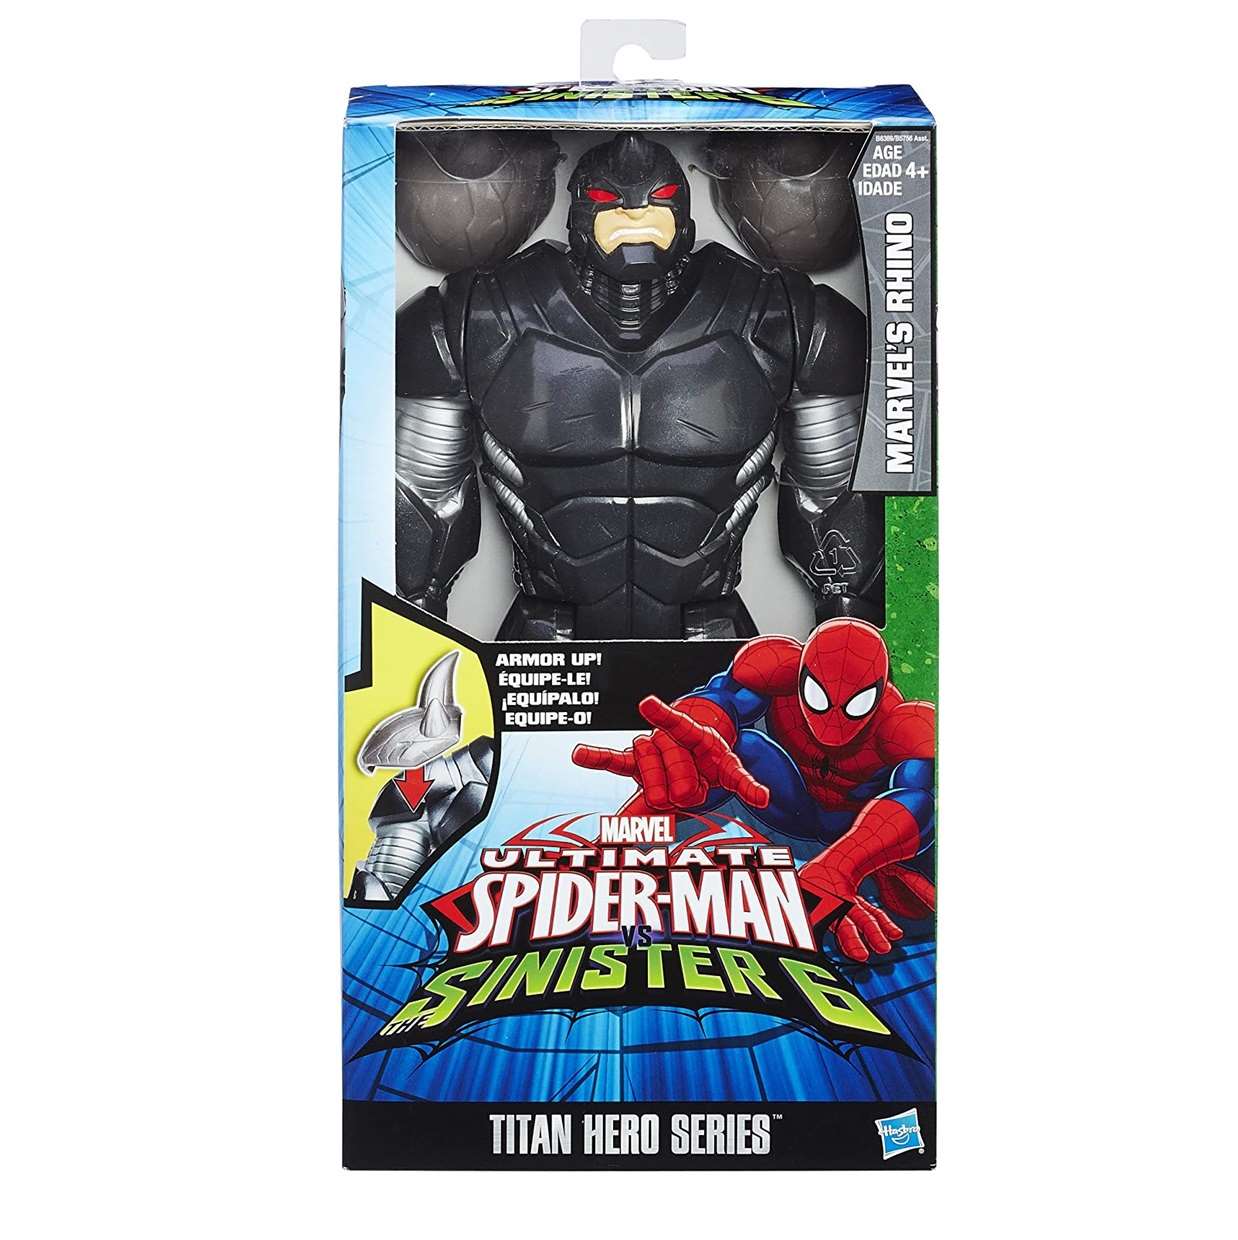 Rhino Figura Ultimate Spiderman Sinister 6 Titan Hero Serie